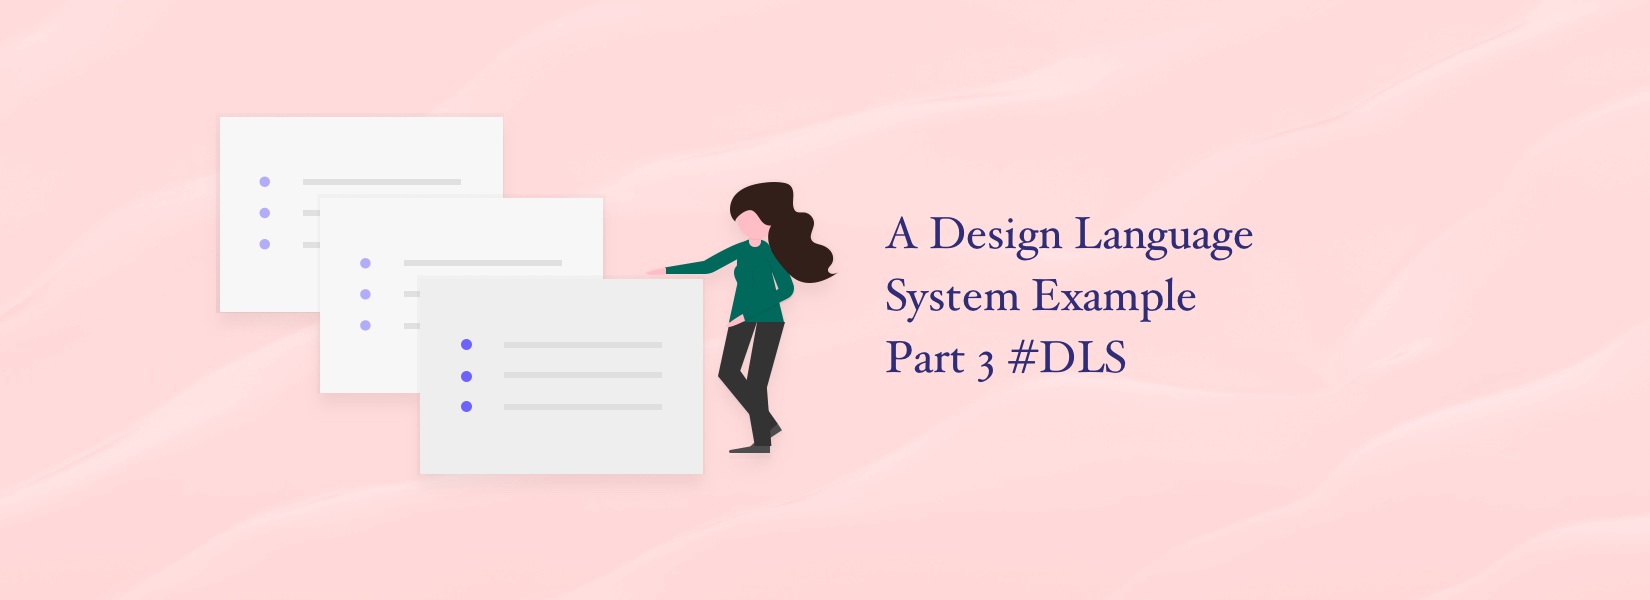 A Design Language System Example Part 3 #DLS